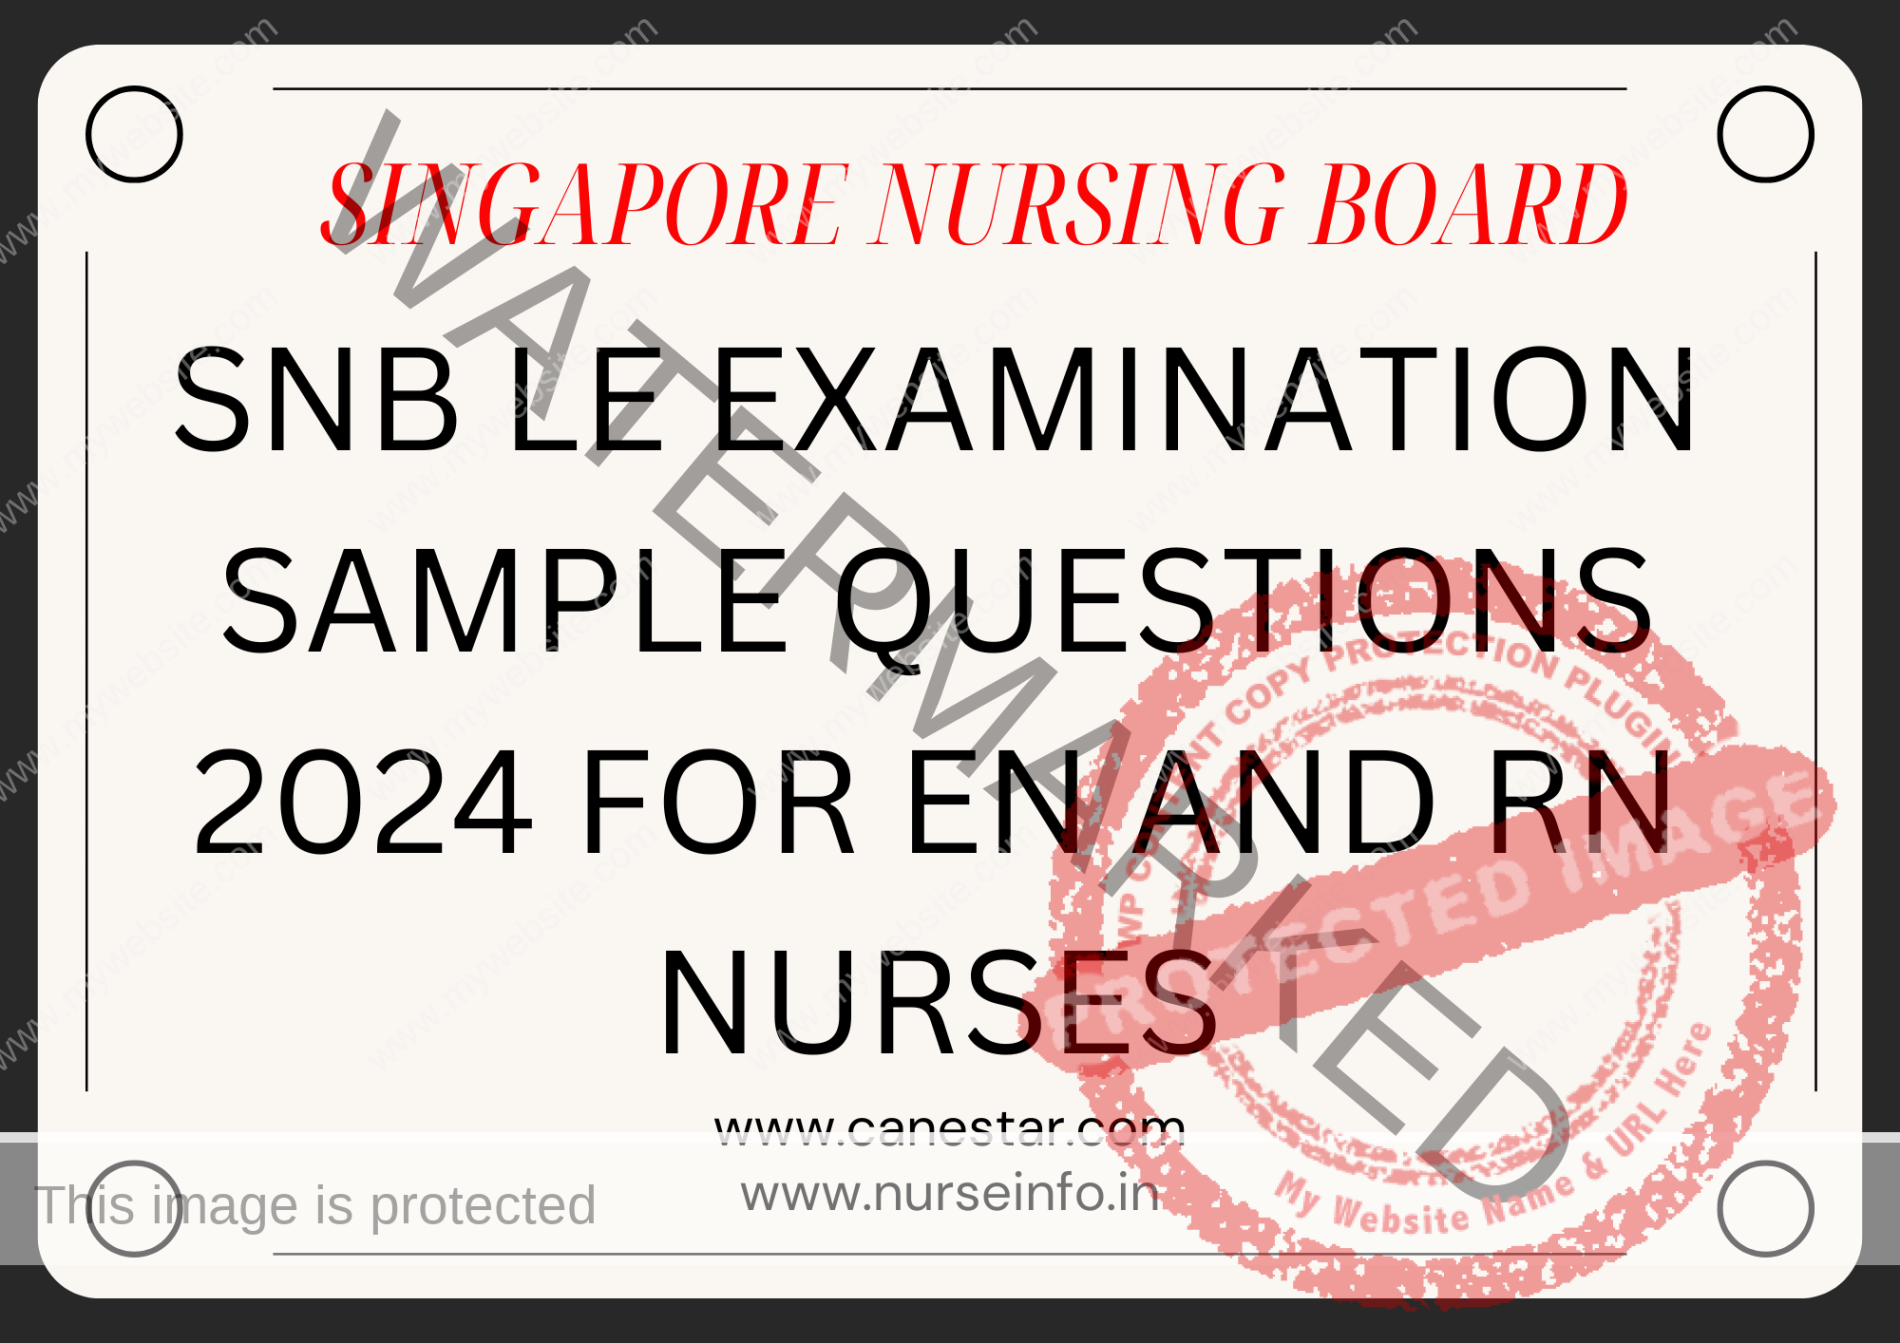 ﻿ SNB LE EXAMINATION SAMPLE QUESTIONS 2024 FOR EN AND RN NURSES -SINGAPORE NURSING BOARD SNB EXAMINATION